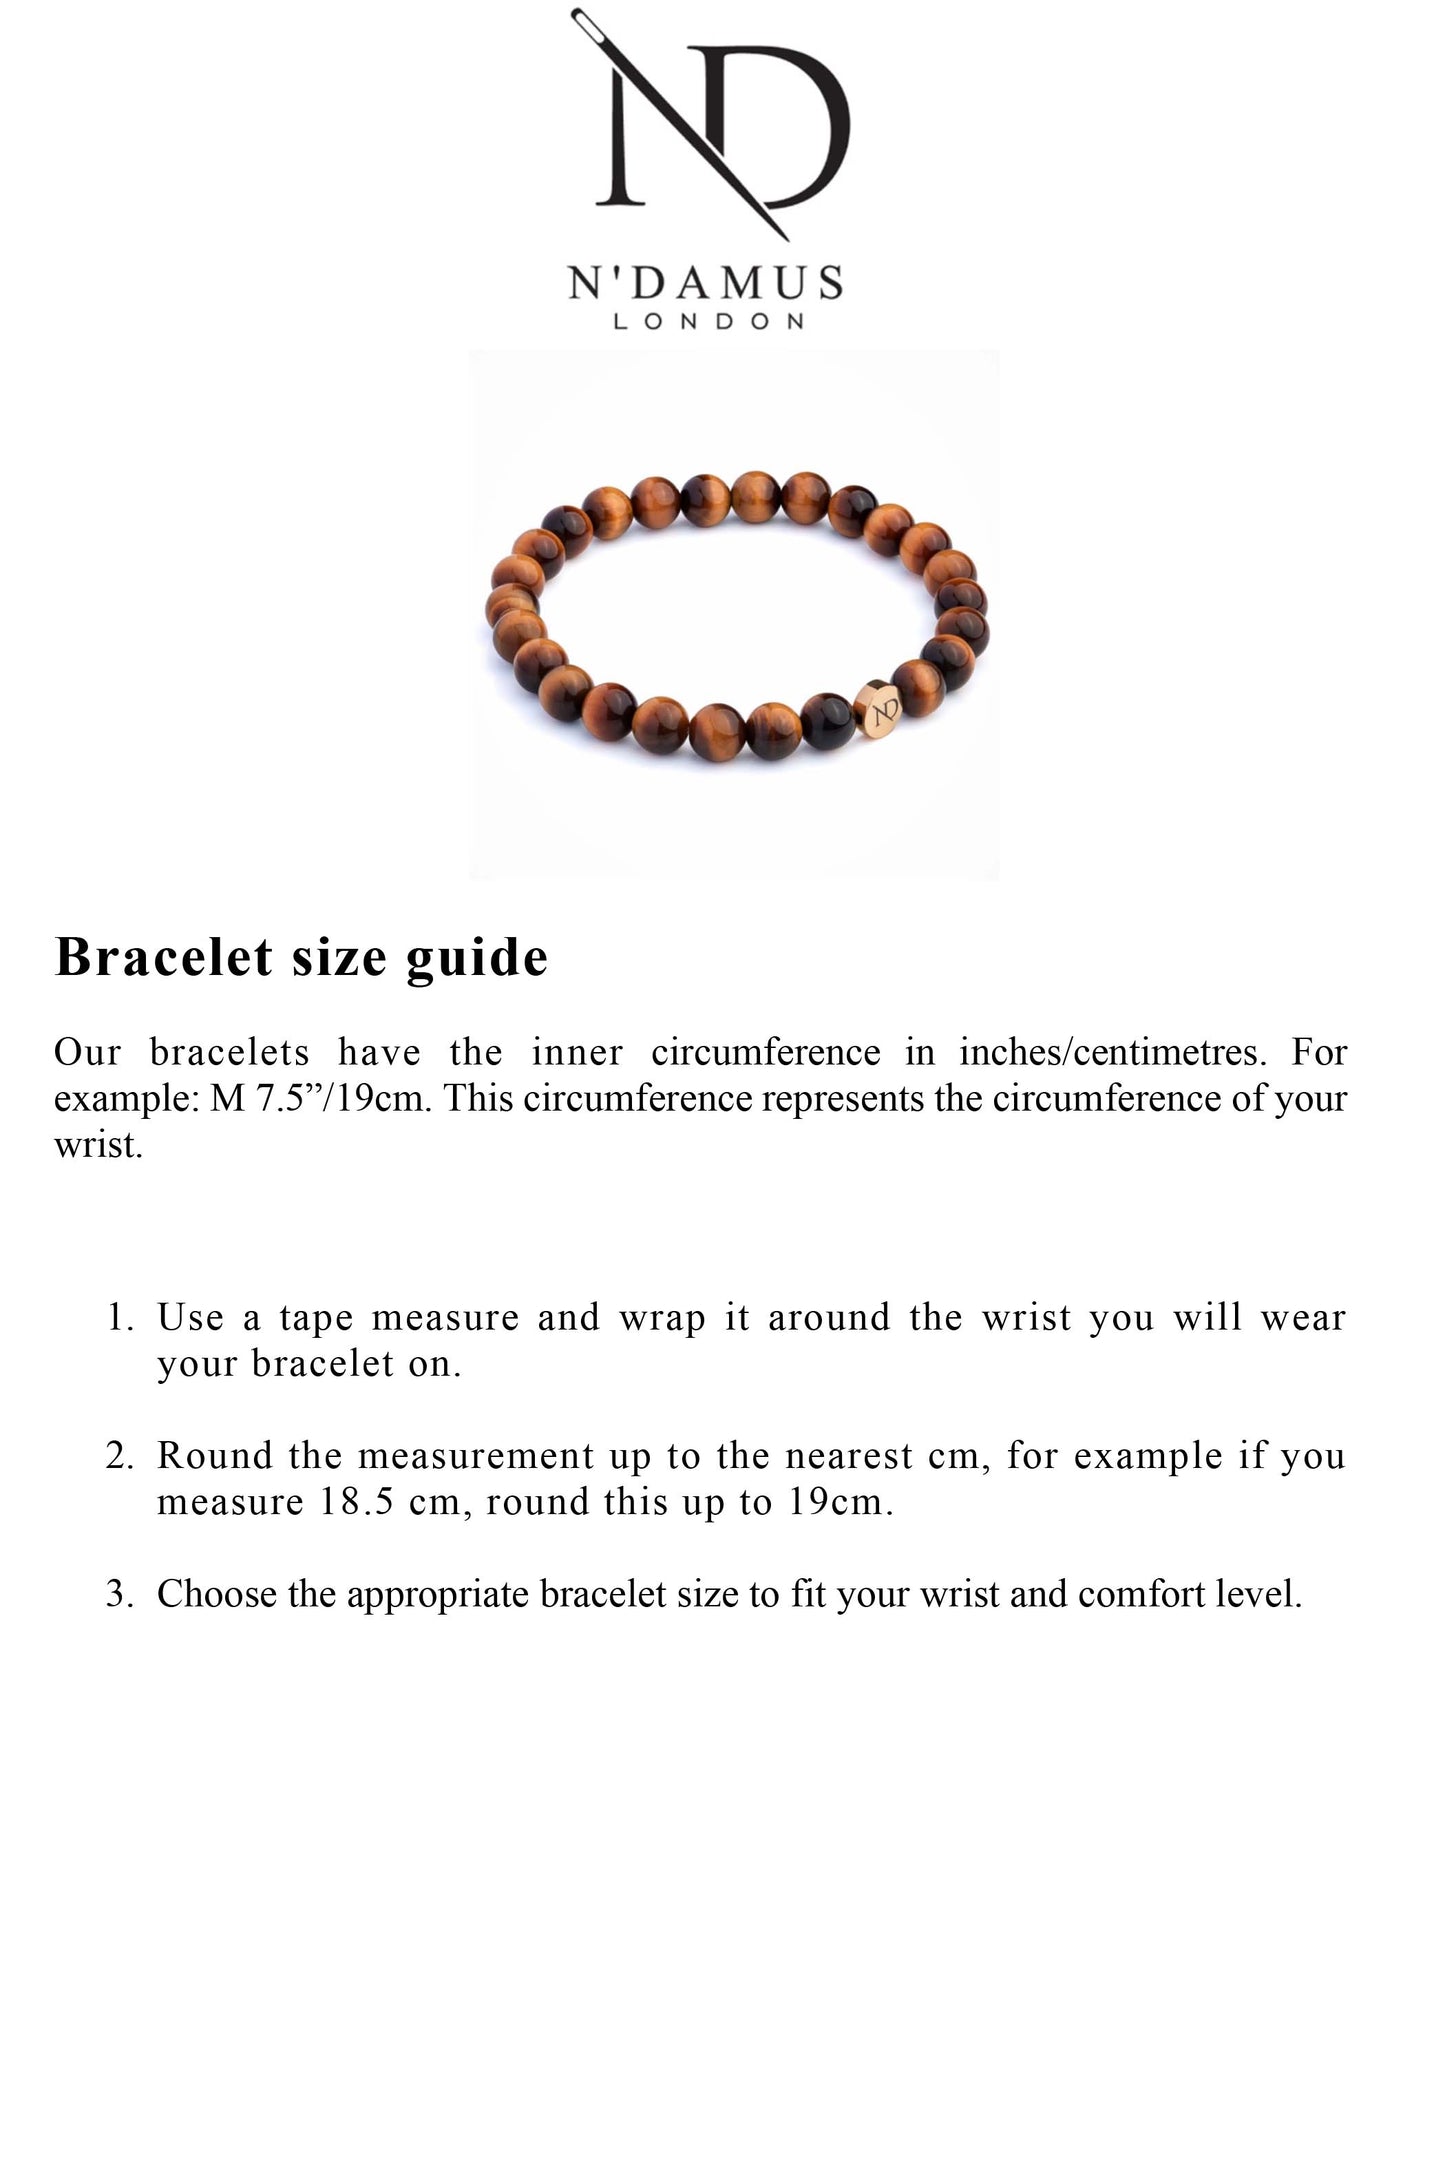 Tigers Eye Gemstone Bracelet